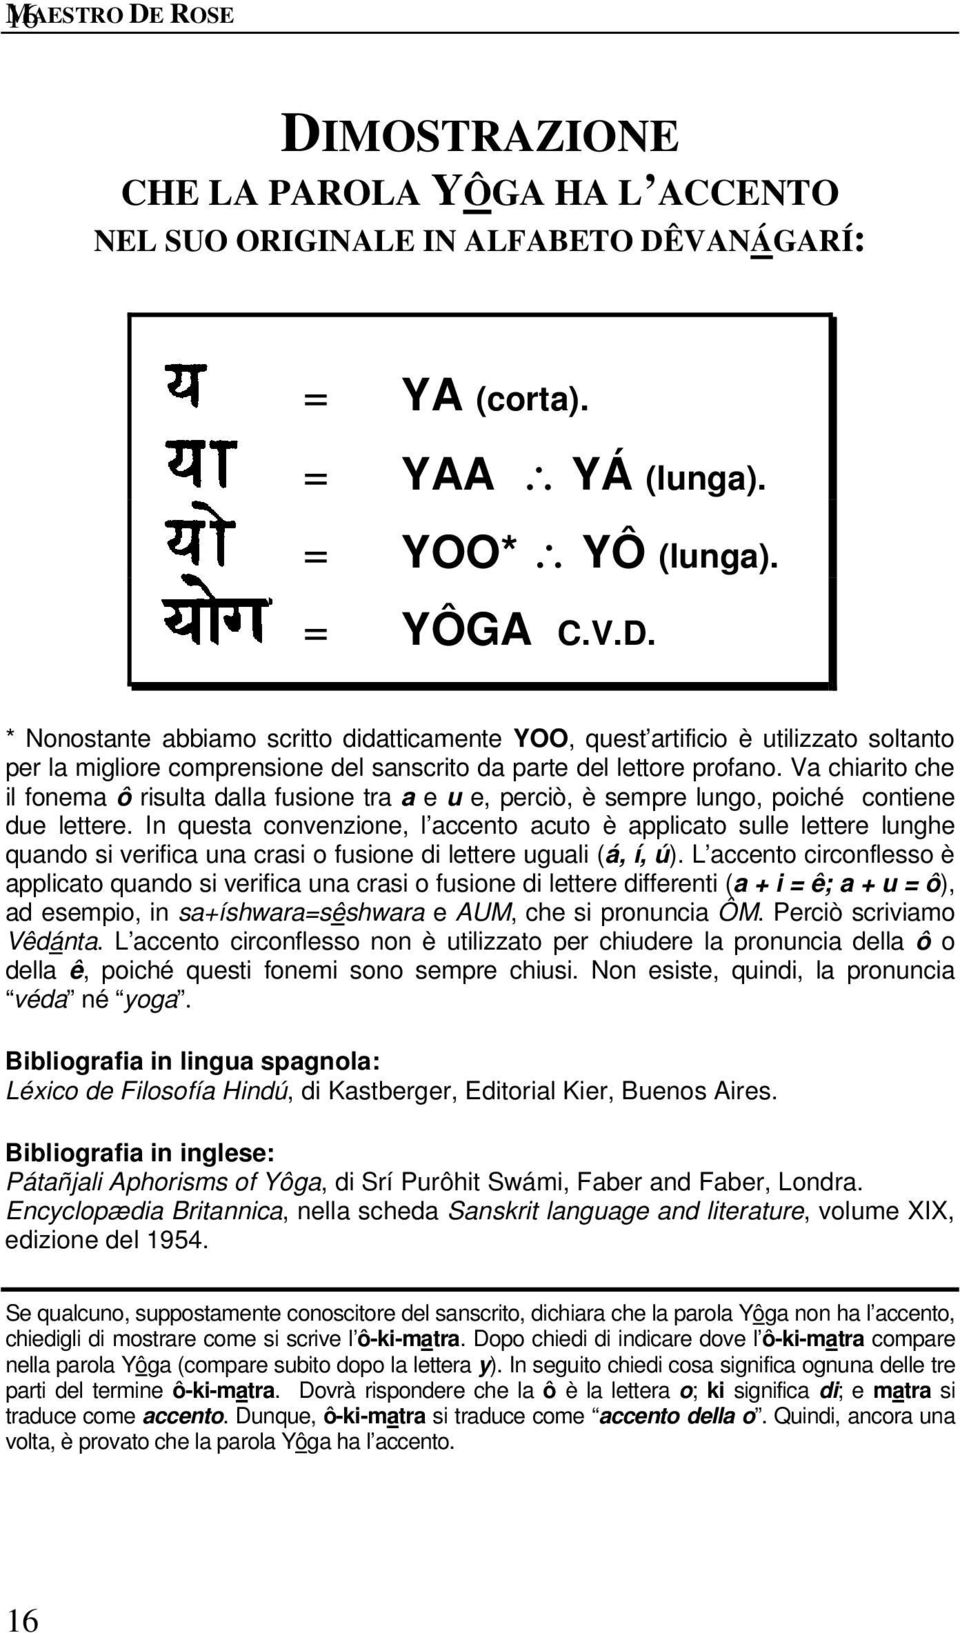 Maestro Swasthya Yoga Shastra Pdf Free Download